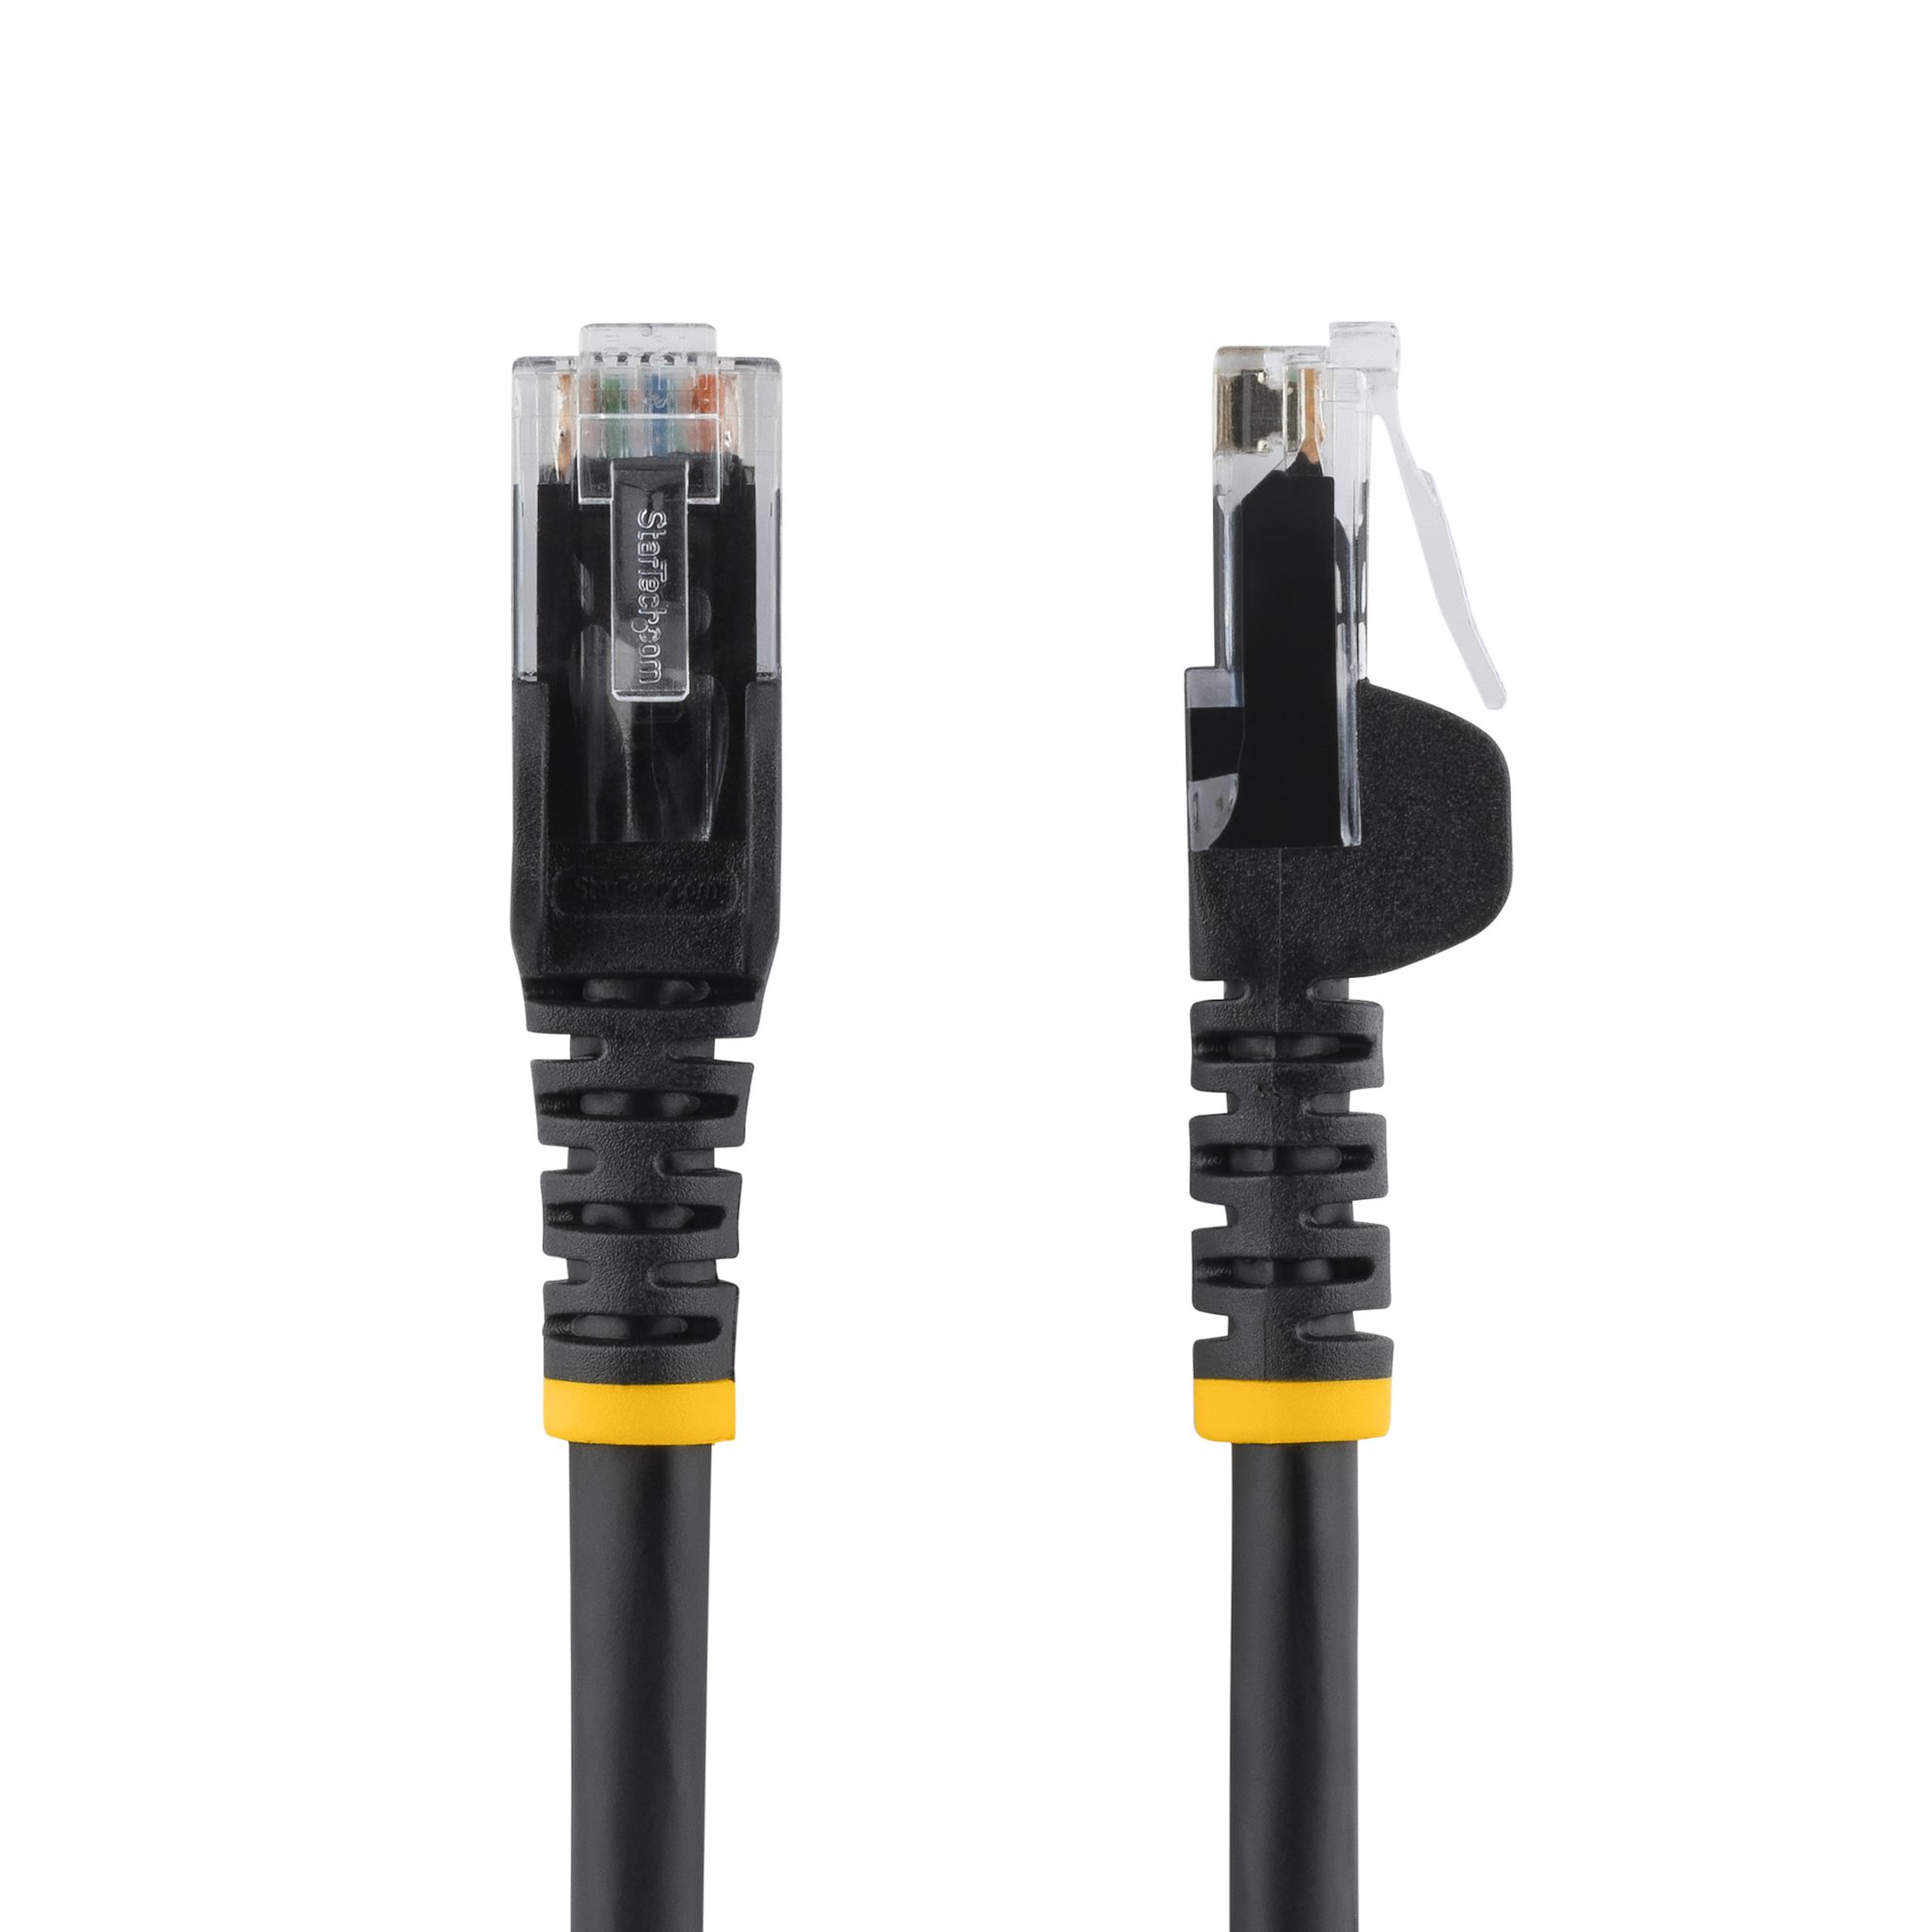 CAT6 Ethernet cable Black 10Pack 6ft ETL - Cat 6 Multipack Cables, Cables